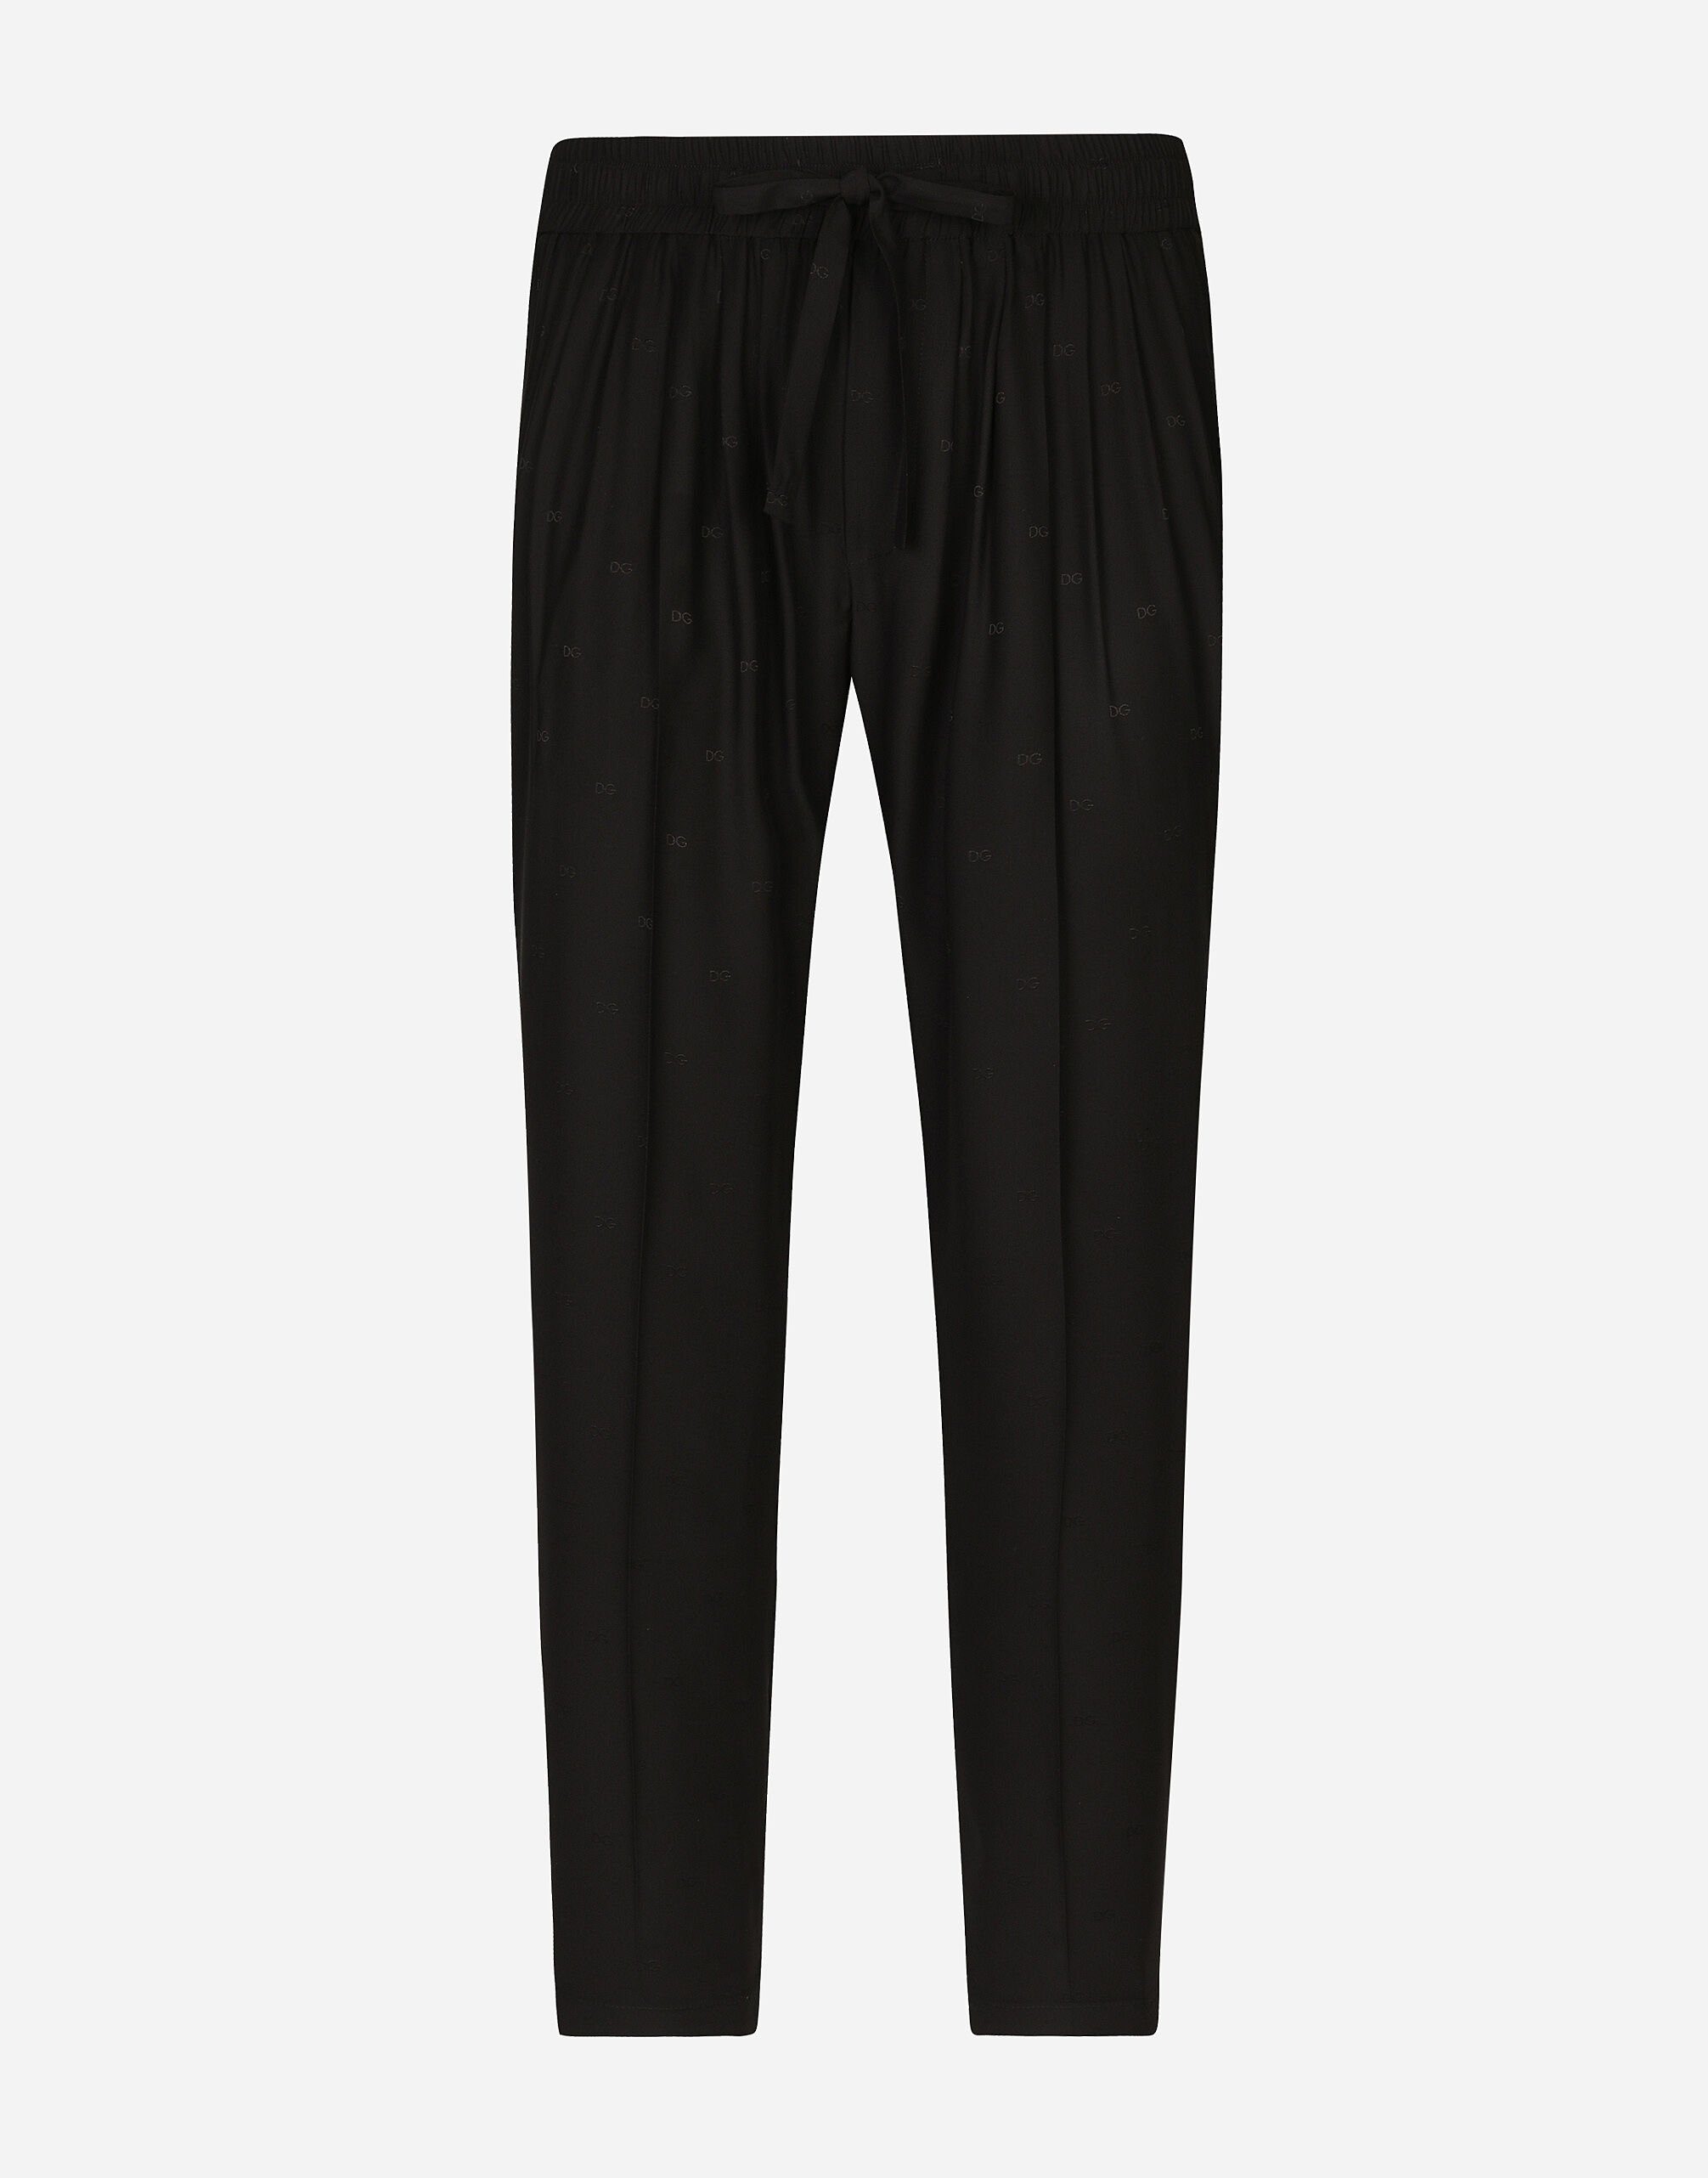 Dolce & Gabbana Silk crepe de chine jogging pants Black GXC60TJAM8M